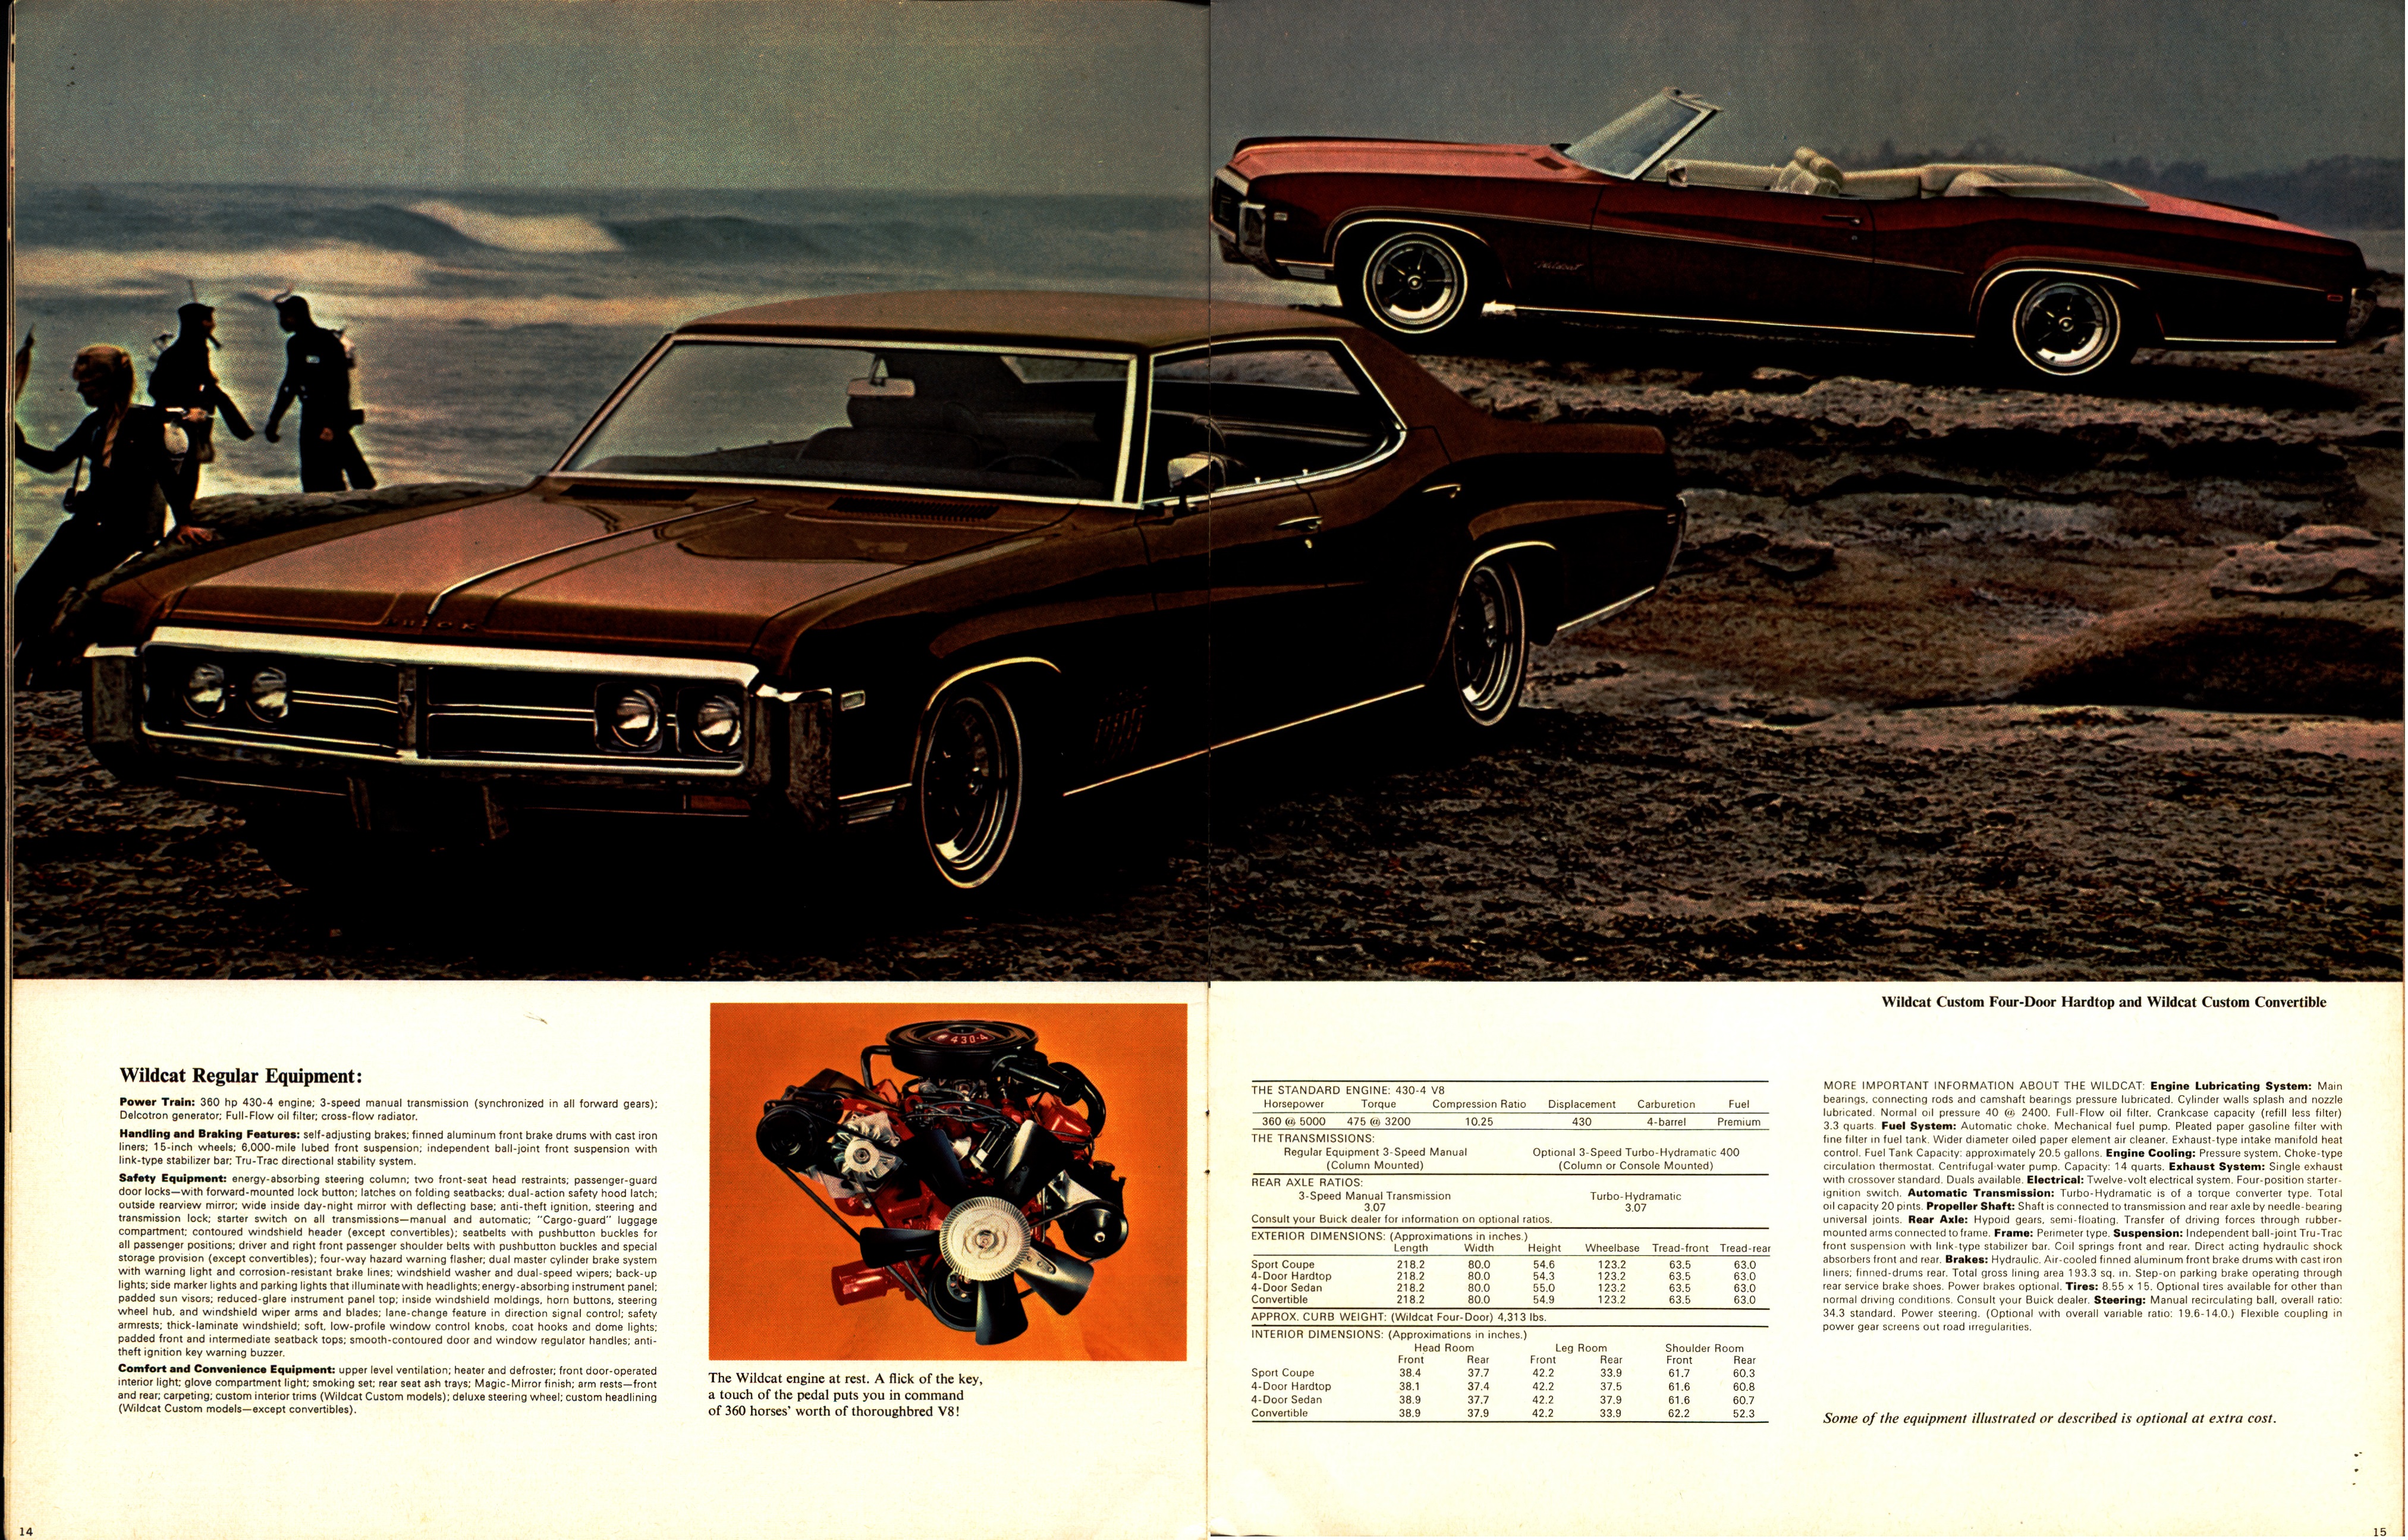 1969 Buick Full Line Brochure Canada 14-15